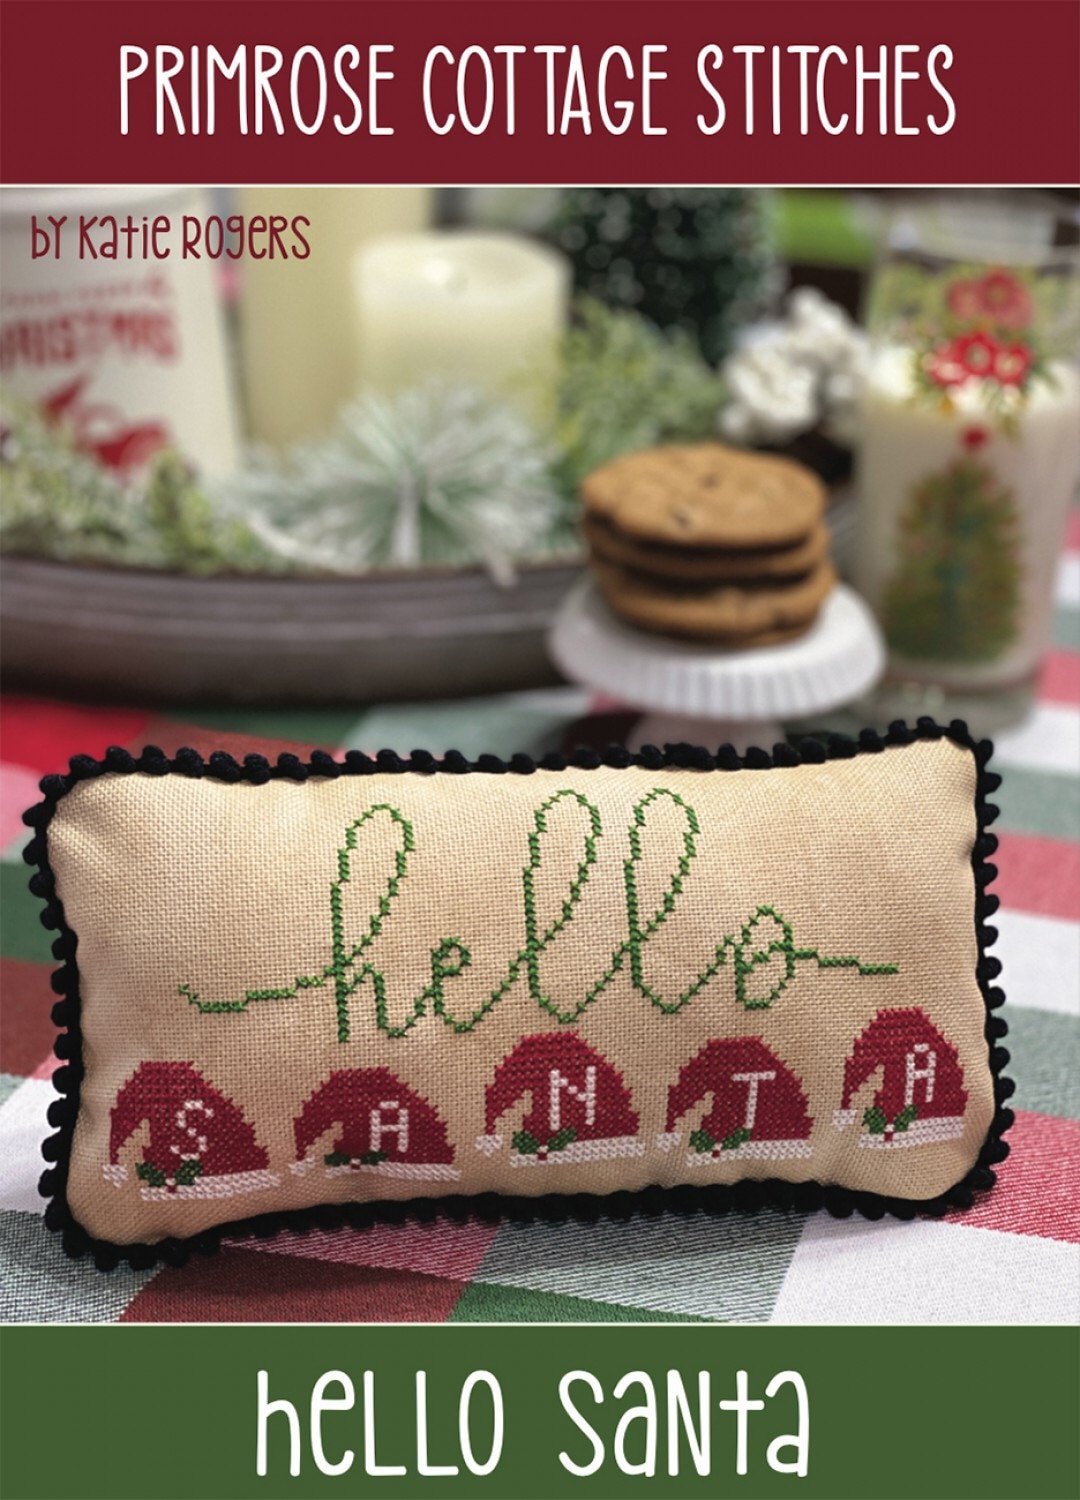 Hello Santa Cross Stitch Pattern - Primrose Cottage Stitches - 99 x 46 stitches